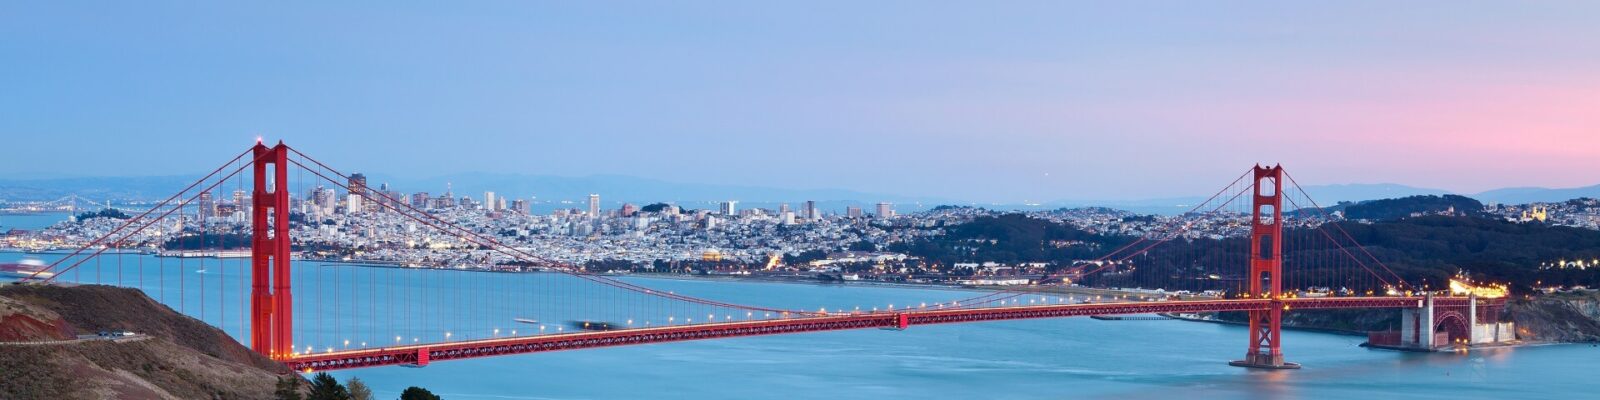 Golden Gate Bridge Pan